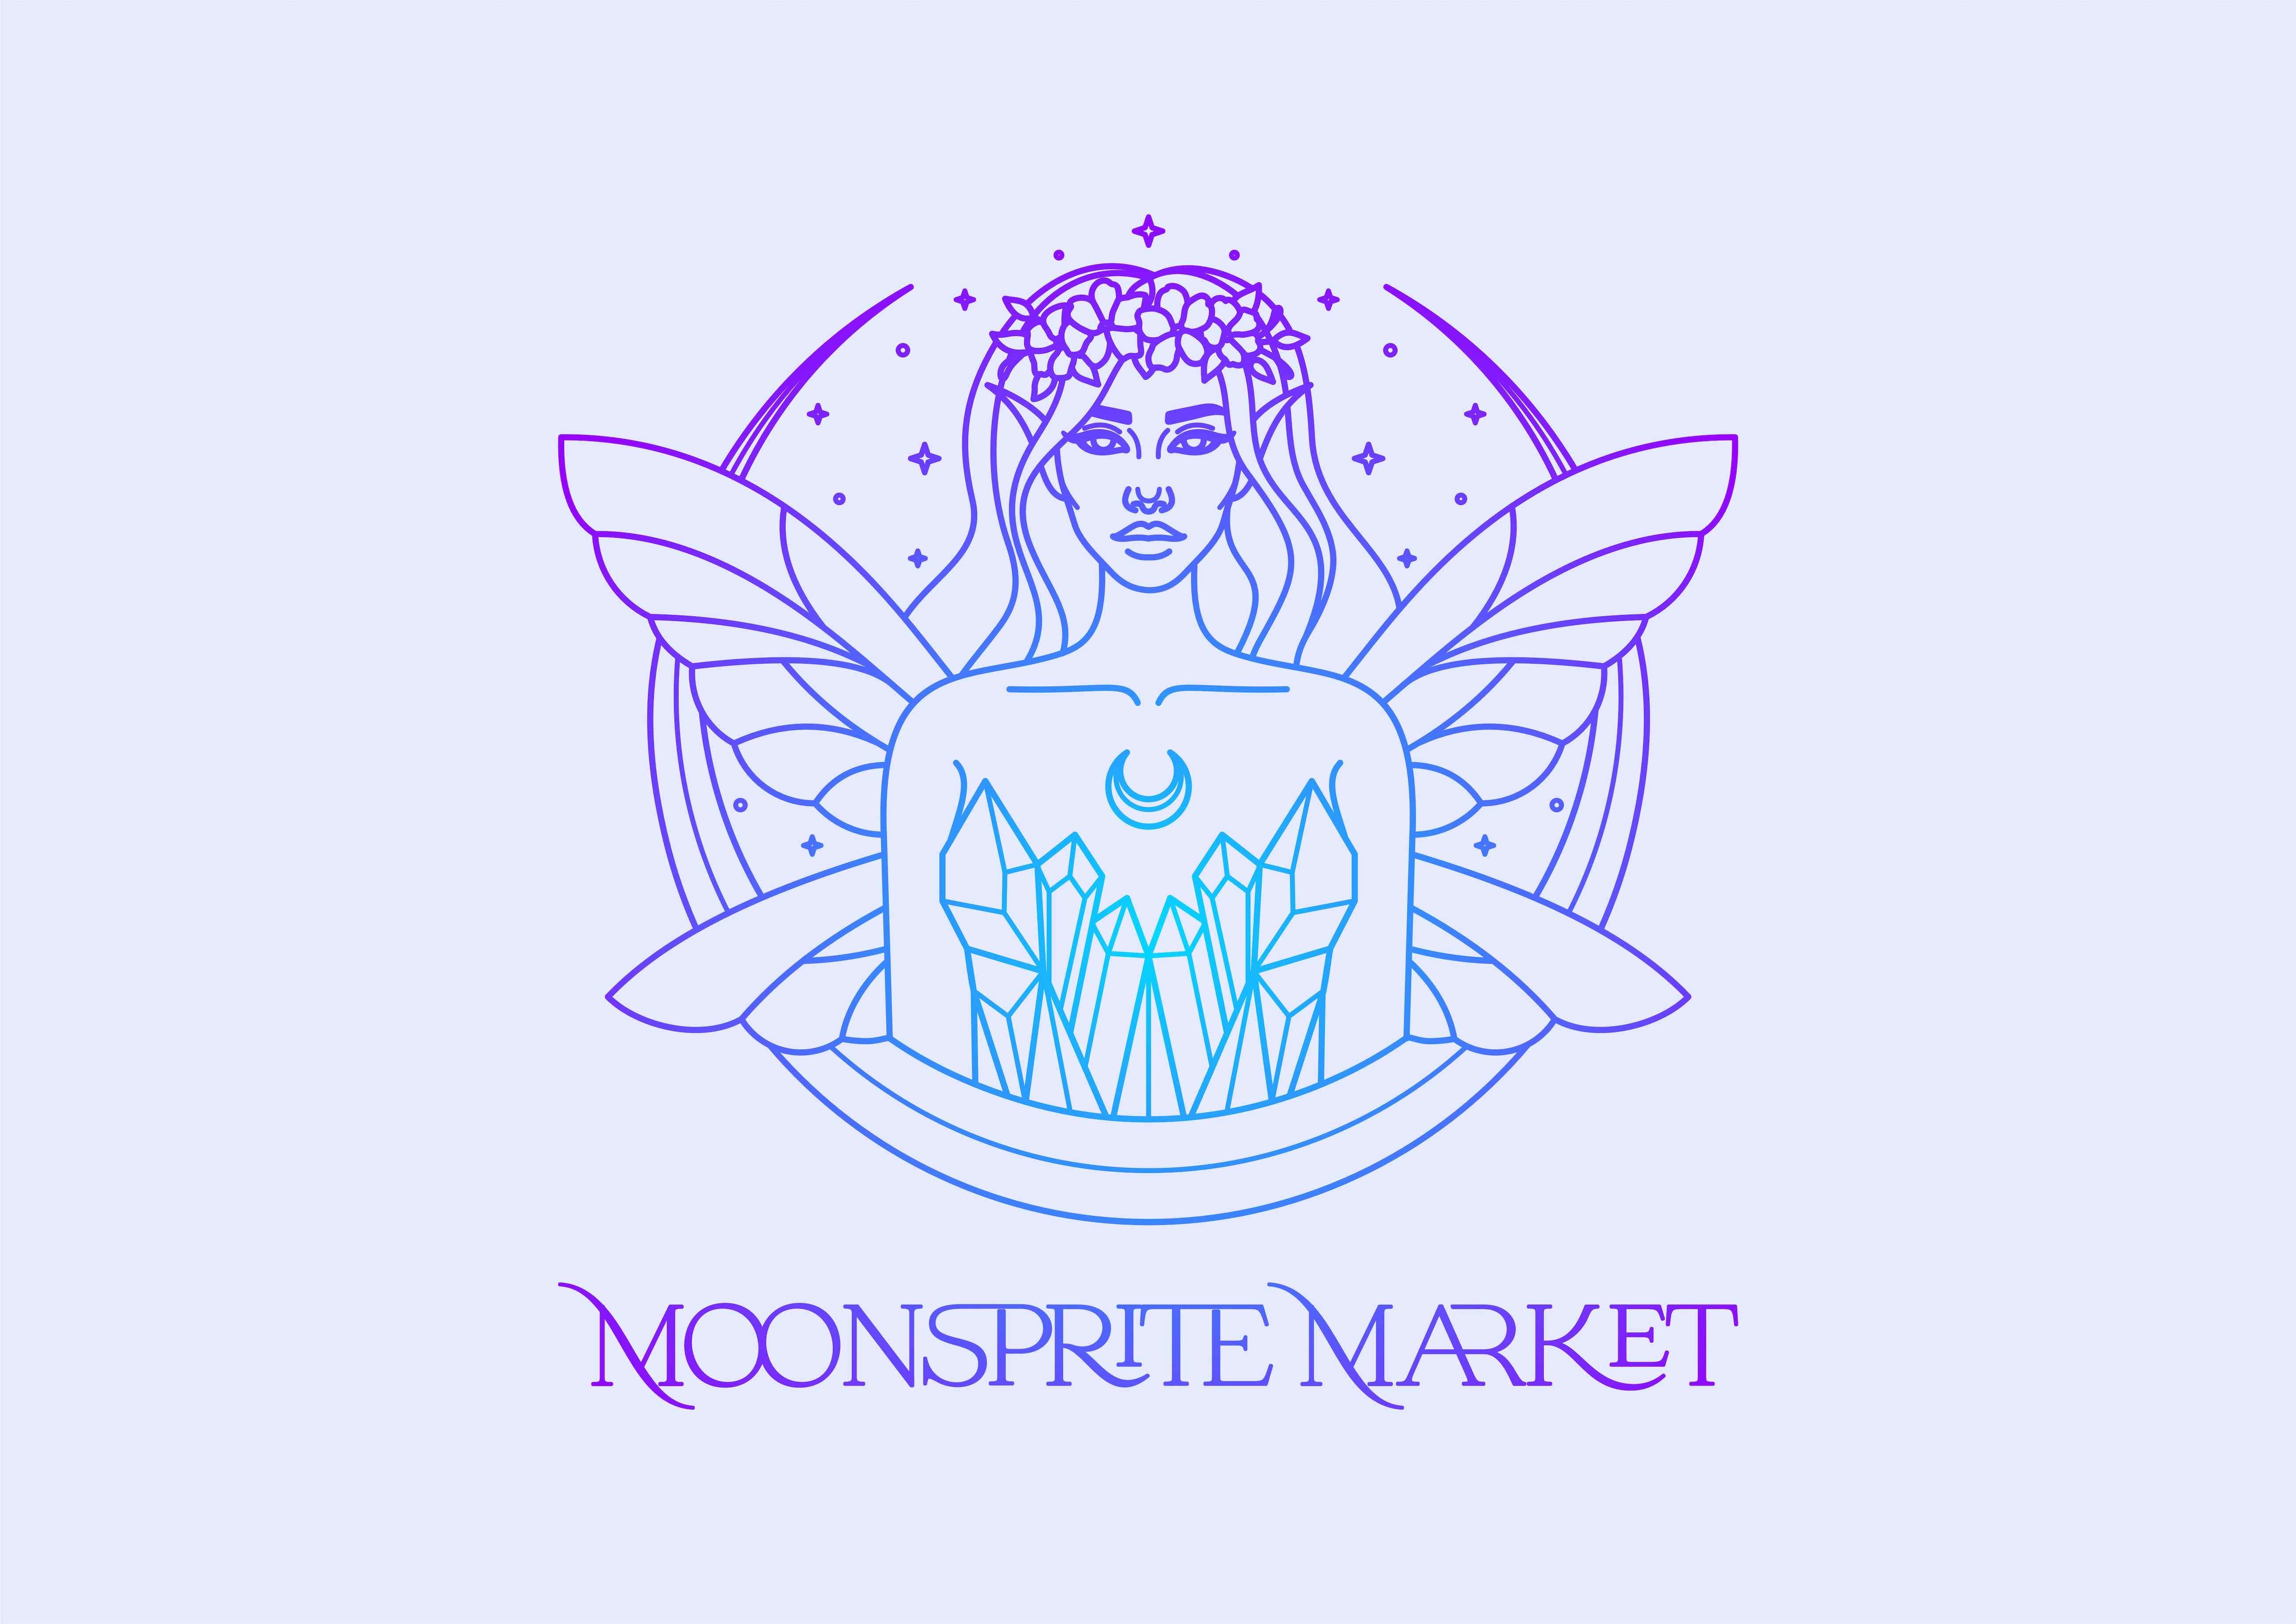 Moonsprite Market